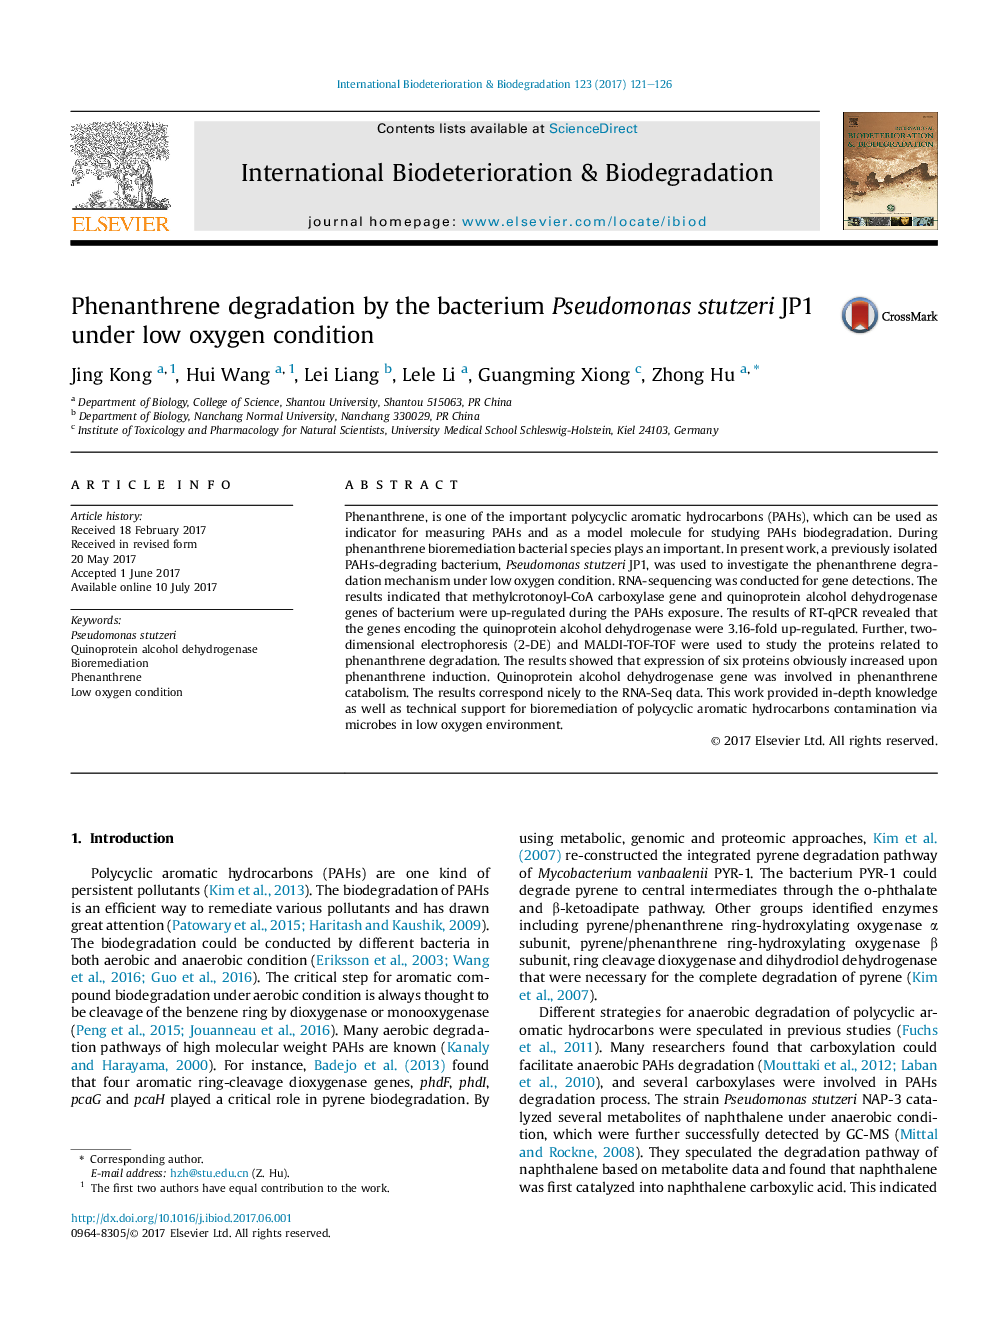 Phenanthrene degradation by the bacterium Pseudomonas stutzeri JP1 under low oxygen condition